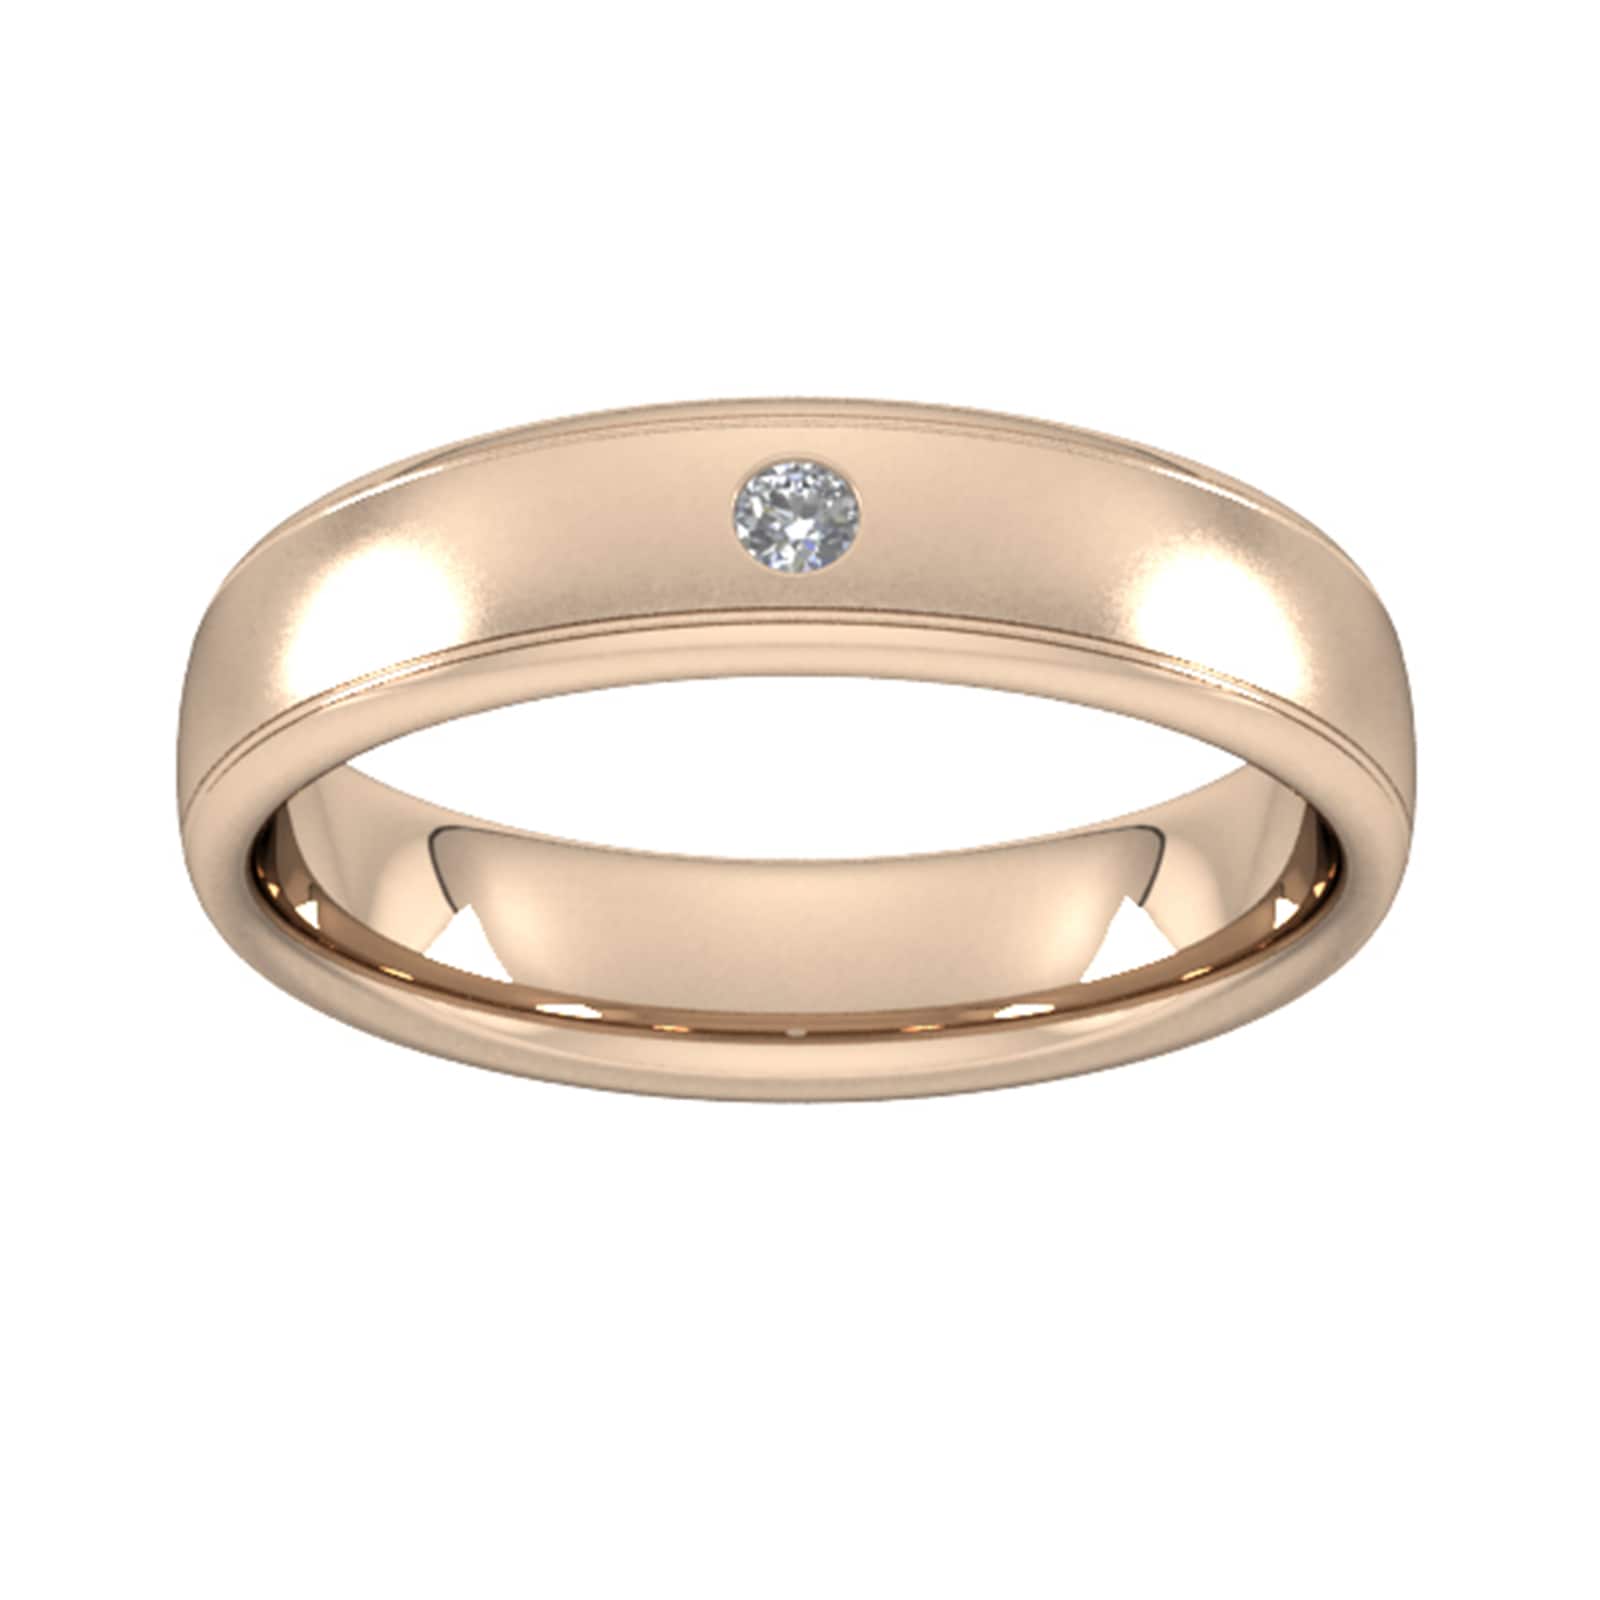 5mm Brilliant Cut Diamond Set Wedding Ring In 18 Carat Rose Gold - Ring Size G